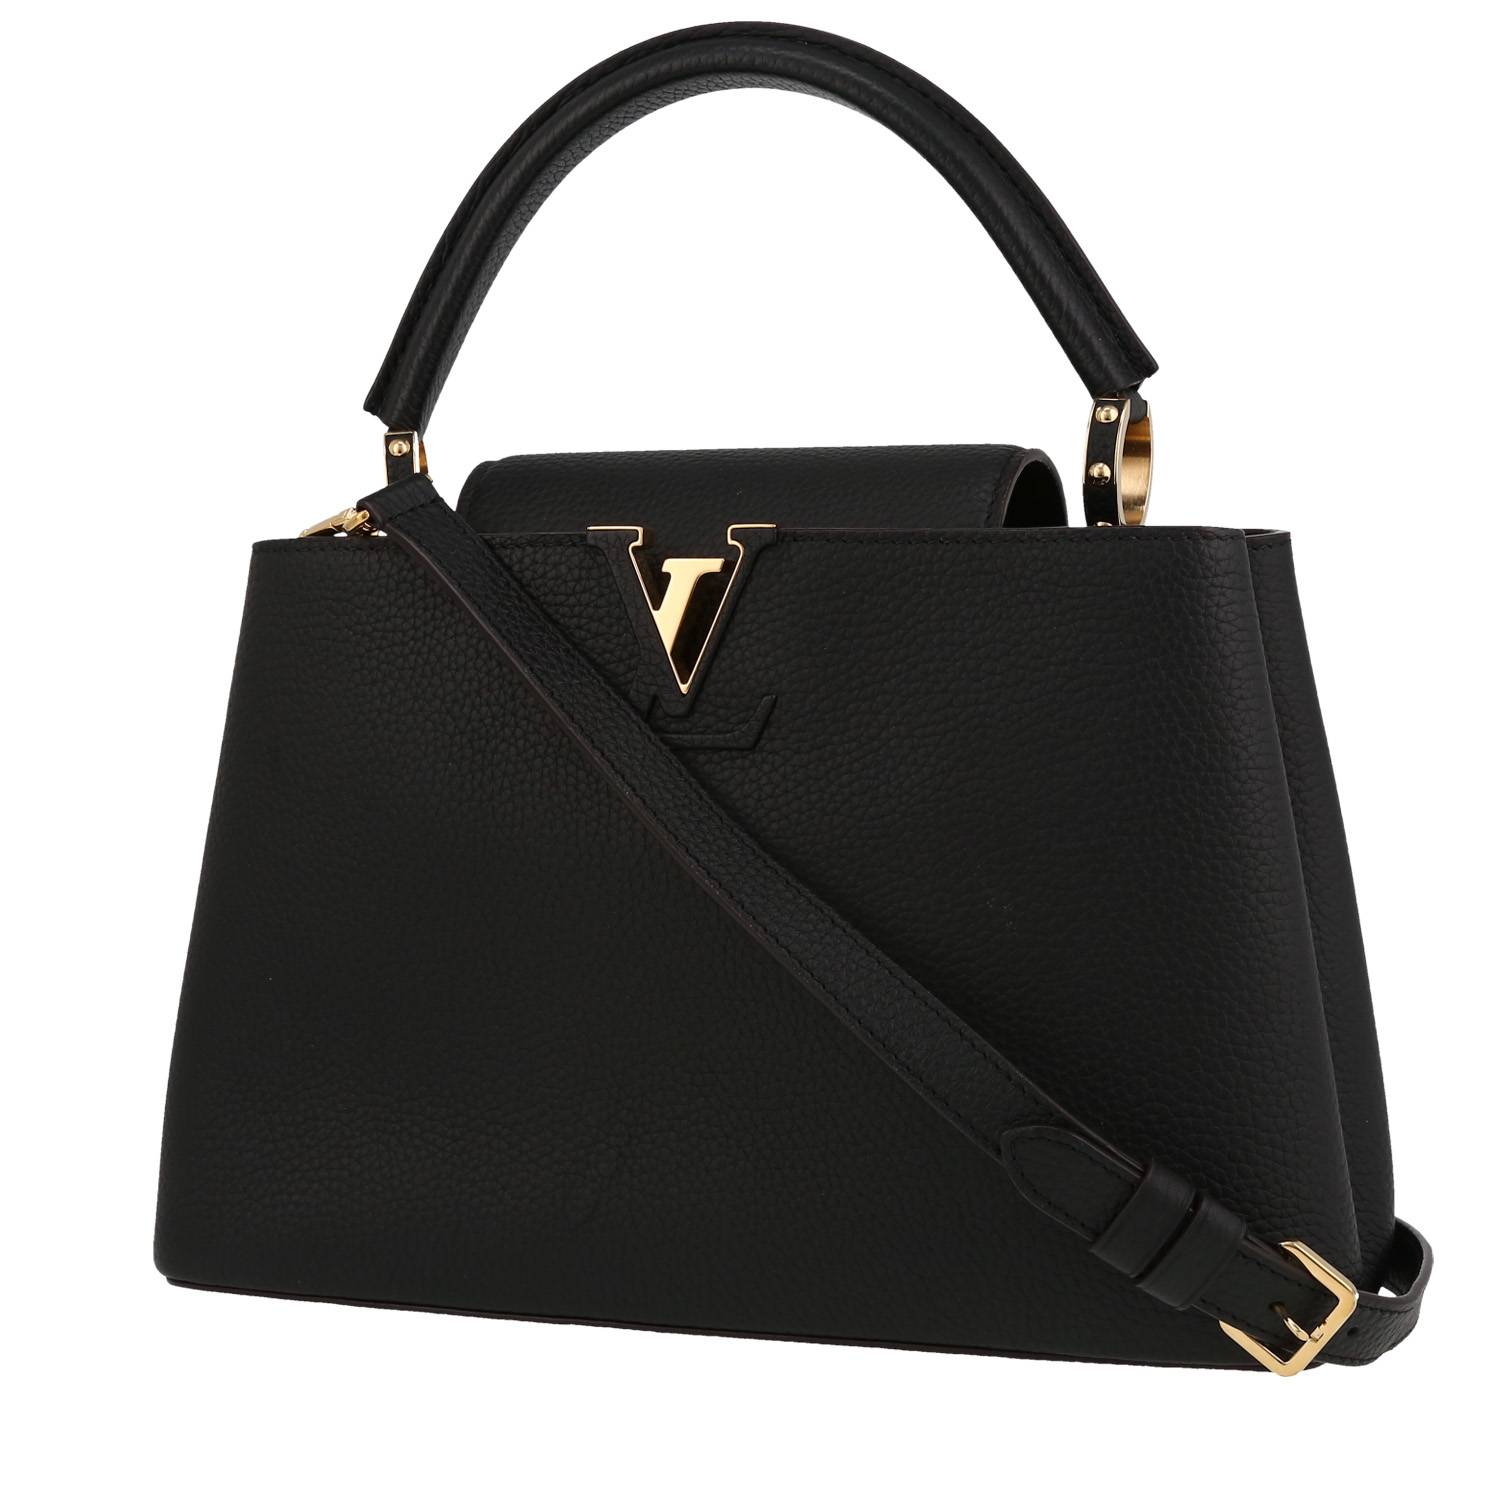 Louis Vuitton Beige Taurillon Leather Capucines MM Bag